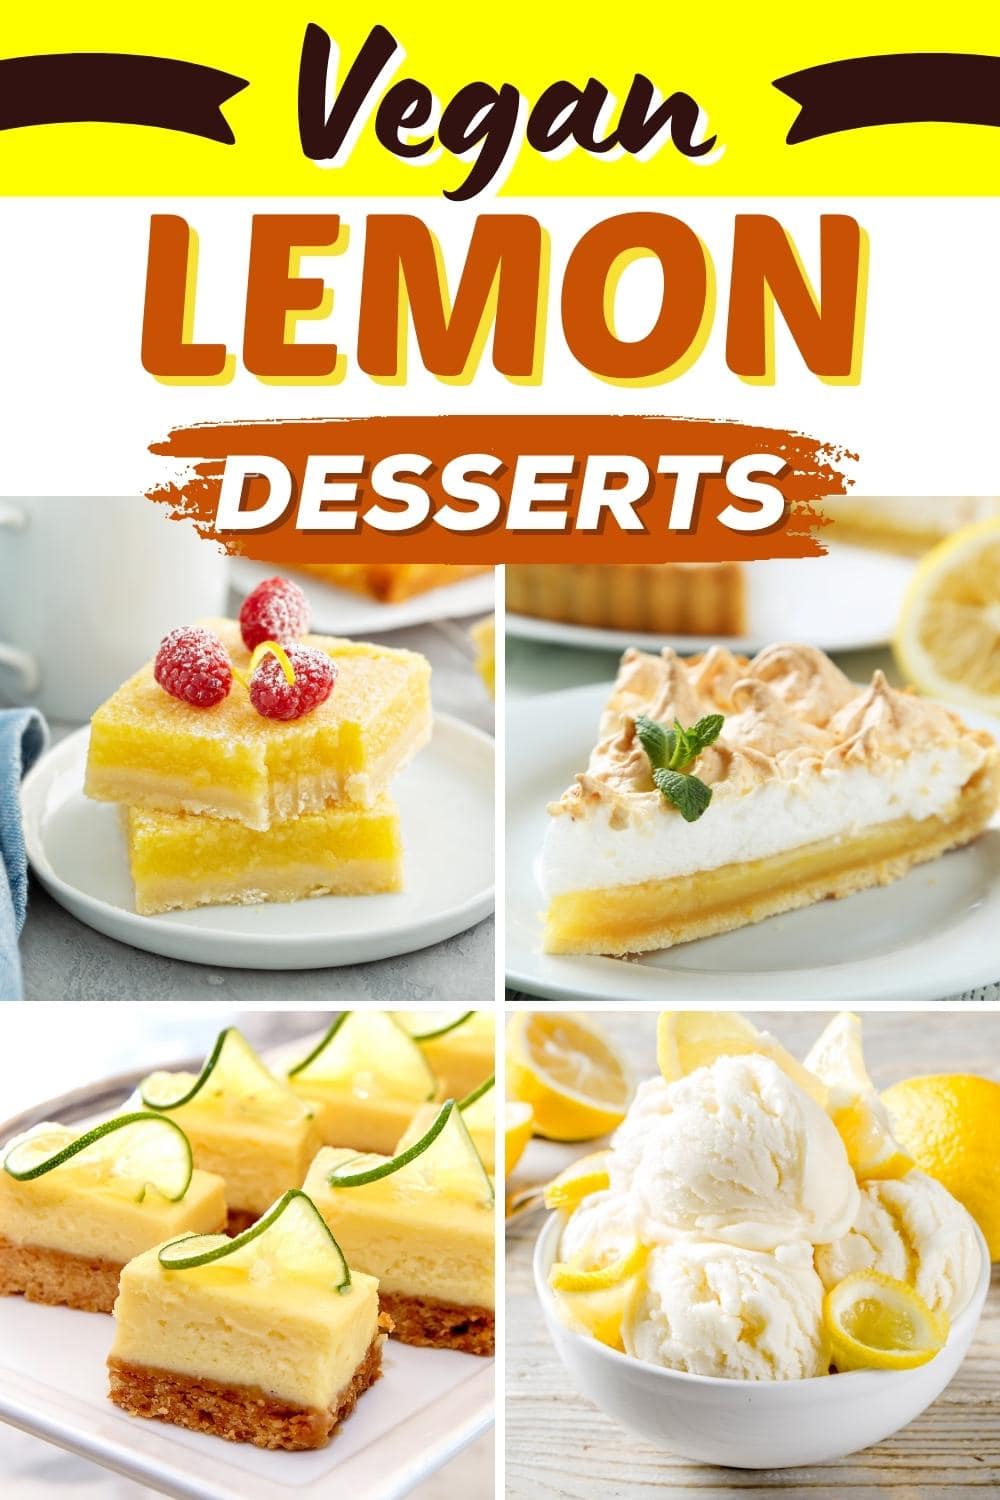 No-Bake Lemon Desserts